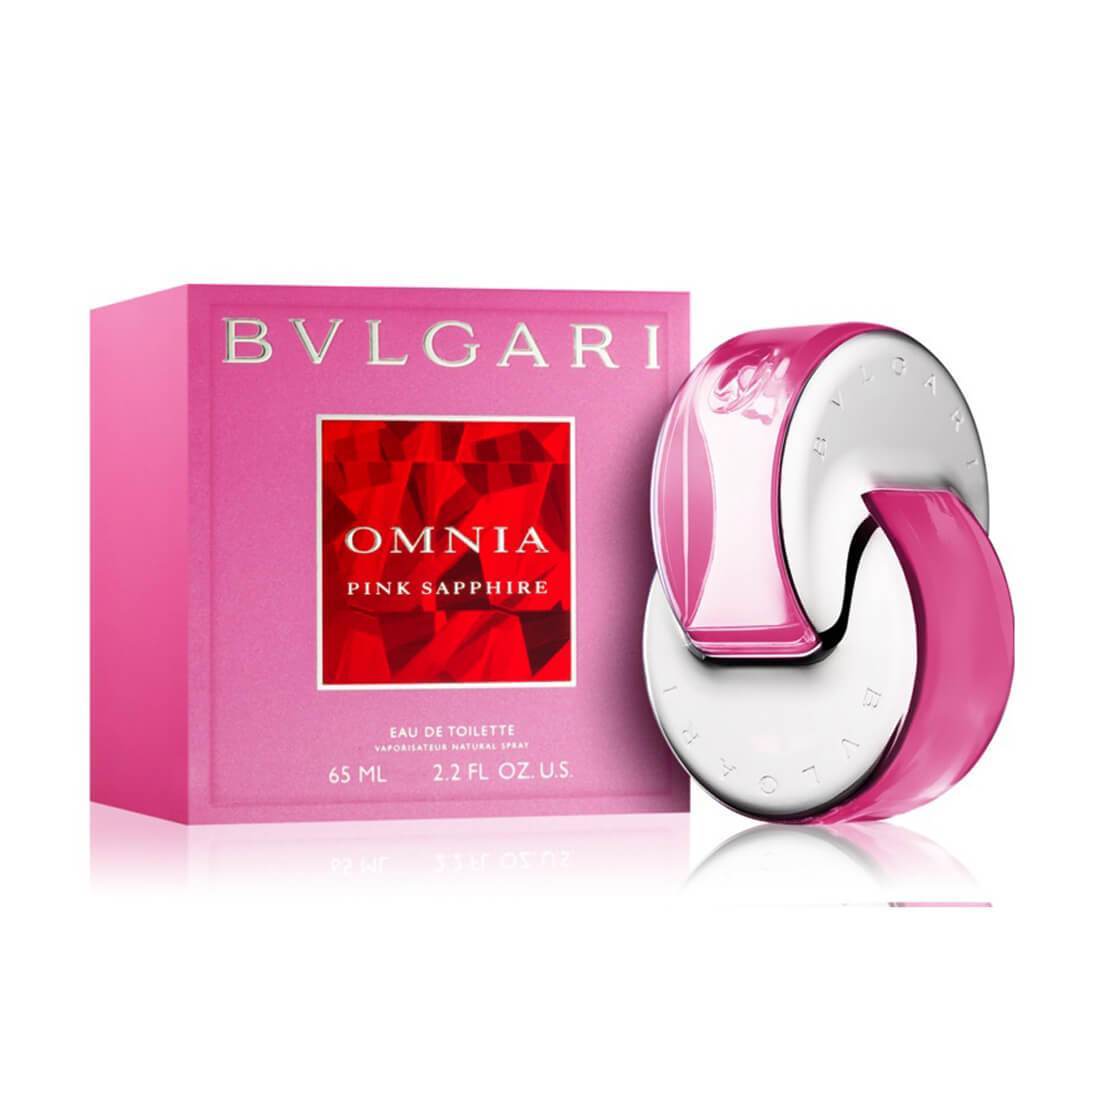 Bvlgari Omnia Pink Sapphire EDT Perfume 